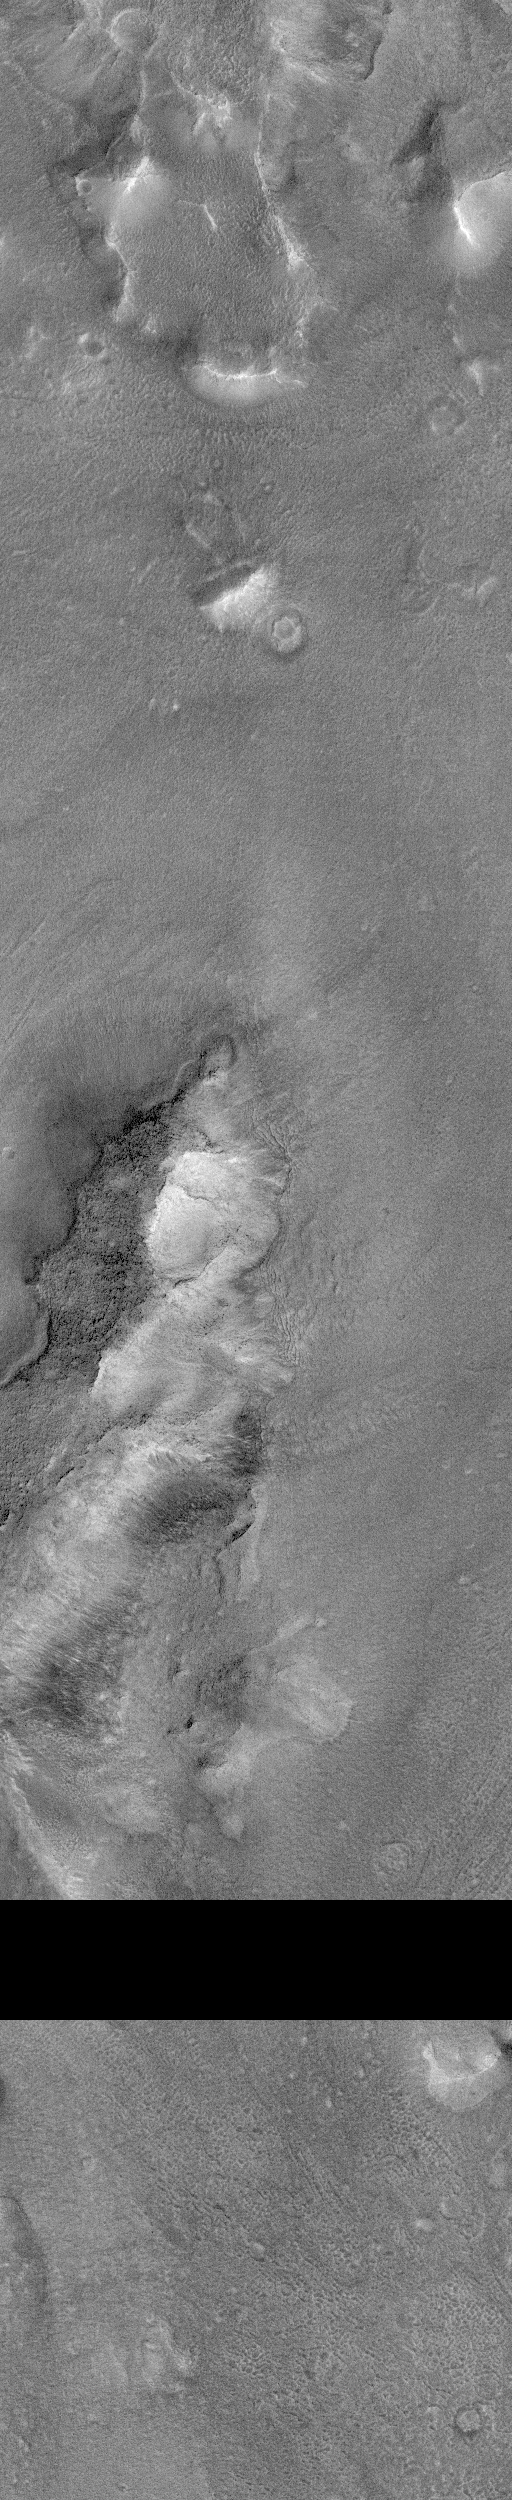 ESA - Cydonia - the face on Mars